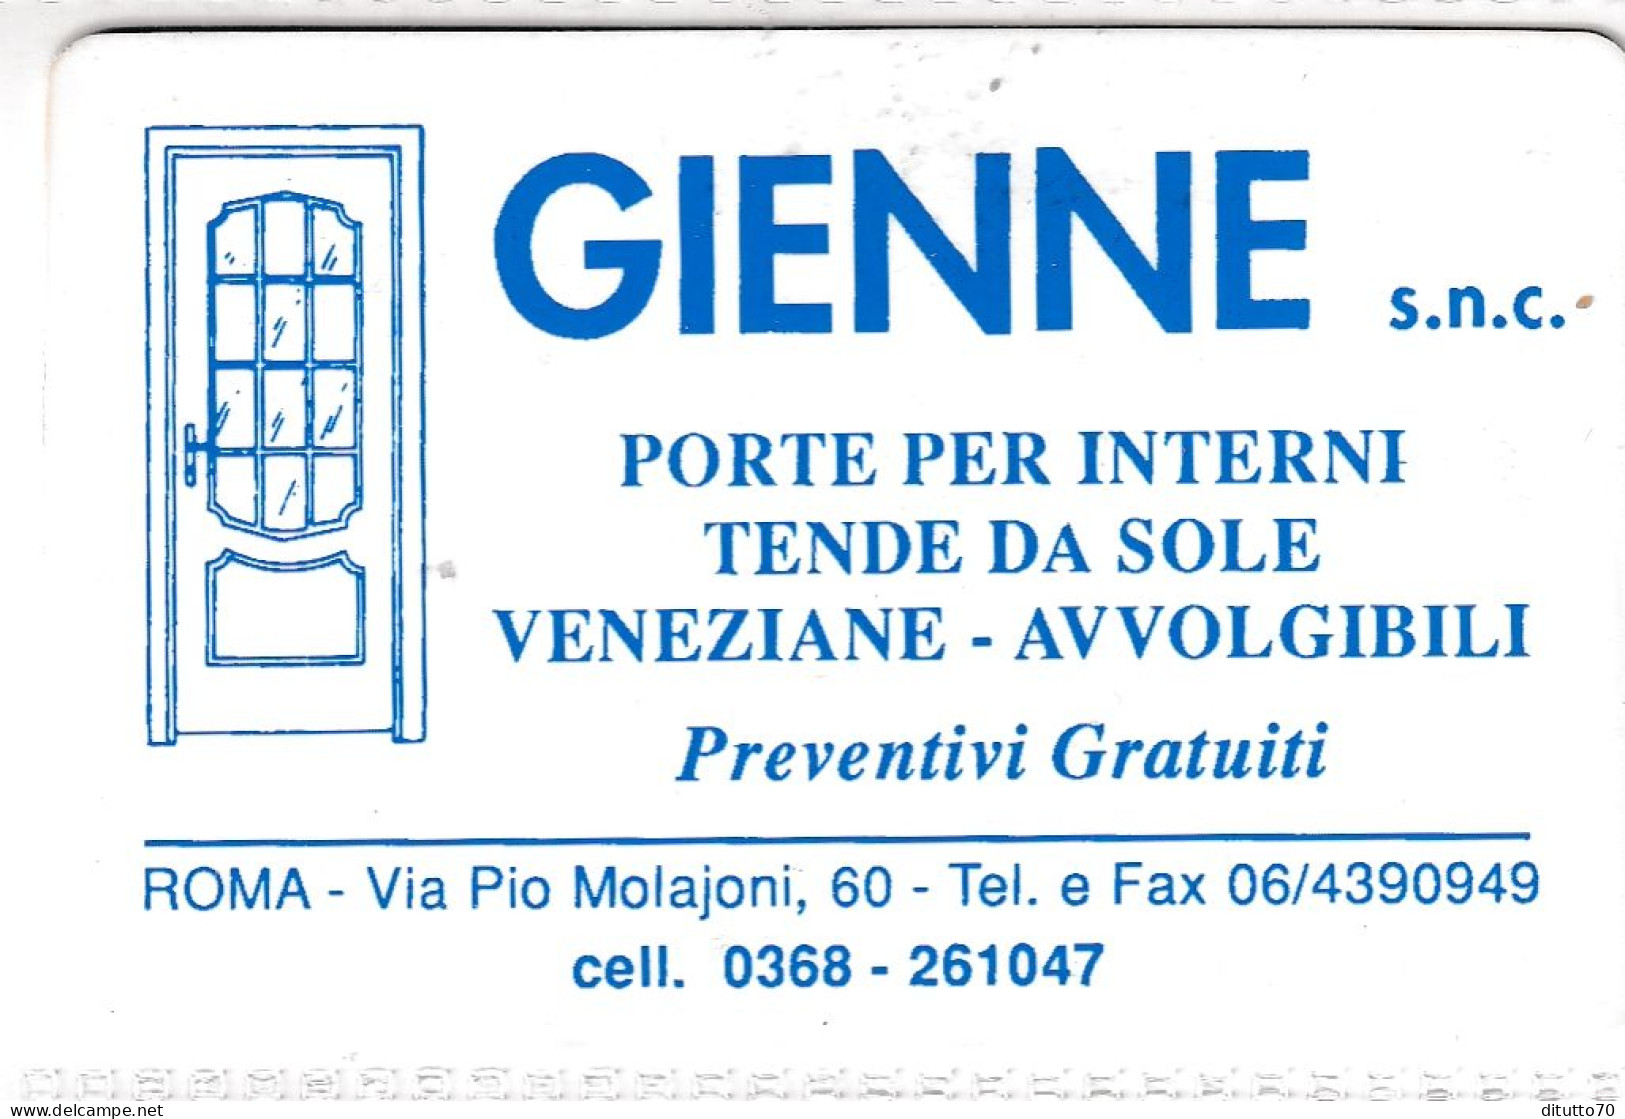 Calendarietto - Gienne - Roma - Anno 1997 - Kleinformat : 1991-00